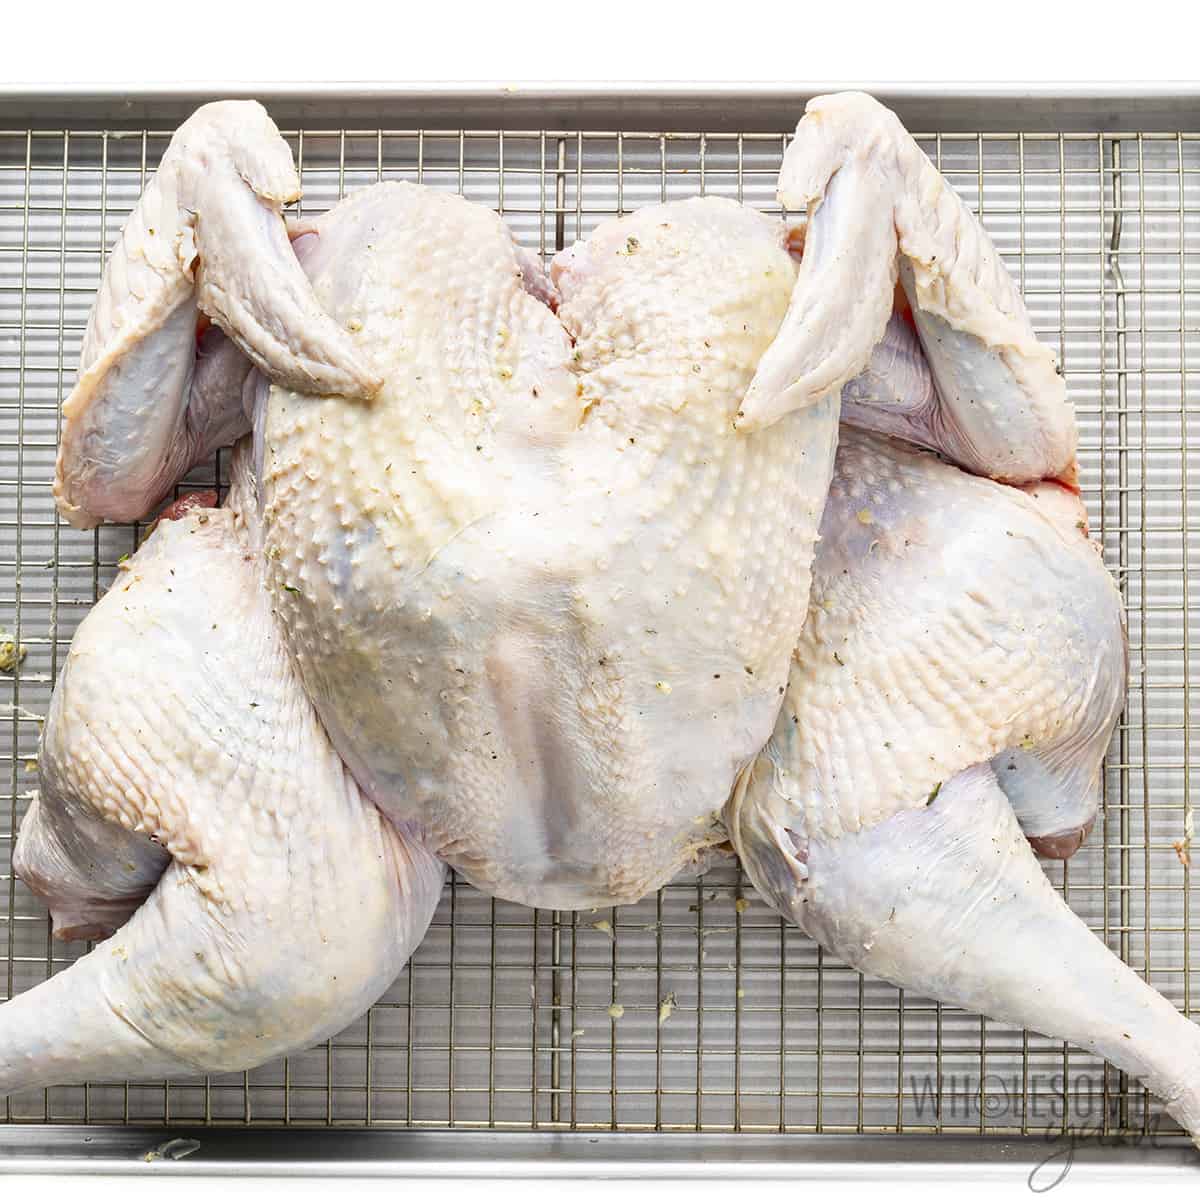 Spatchcocked turkey with garlic butter underneath the skin